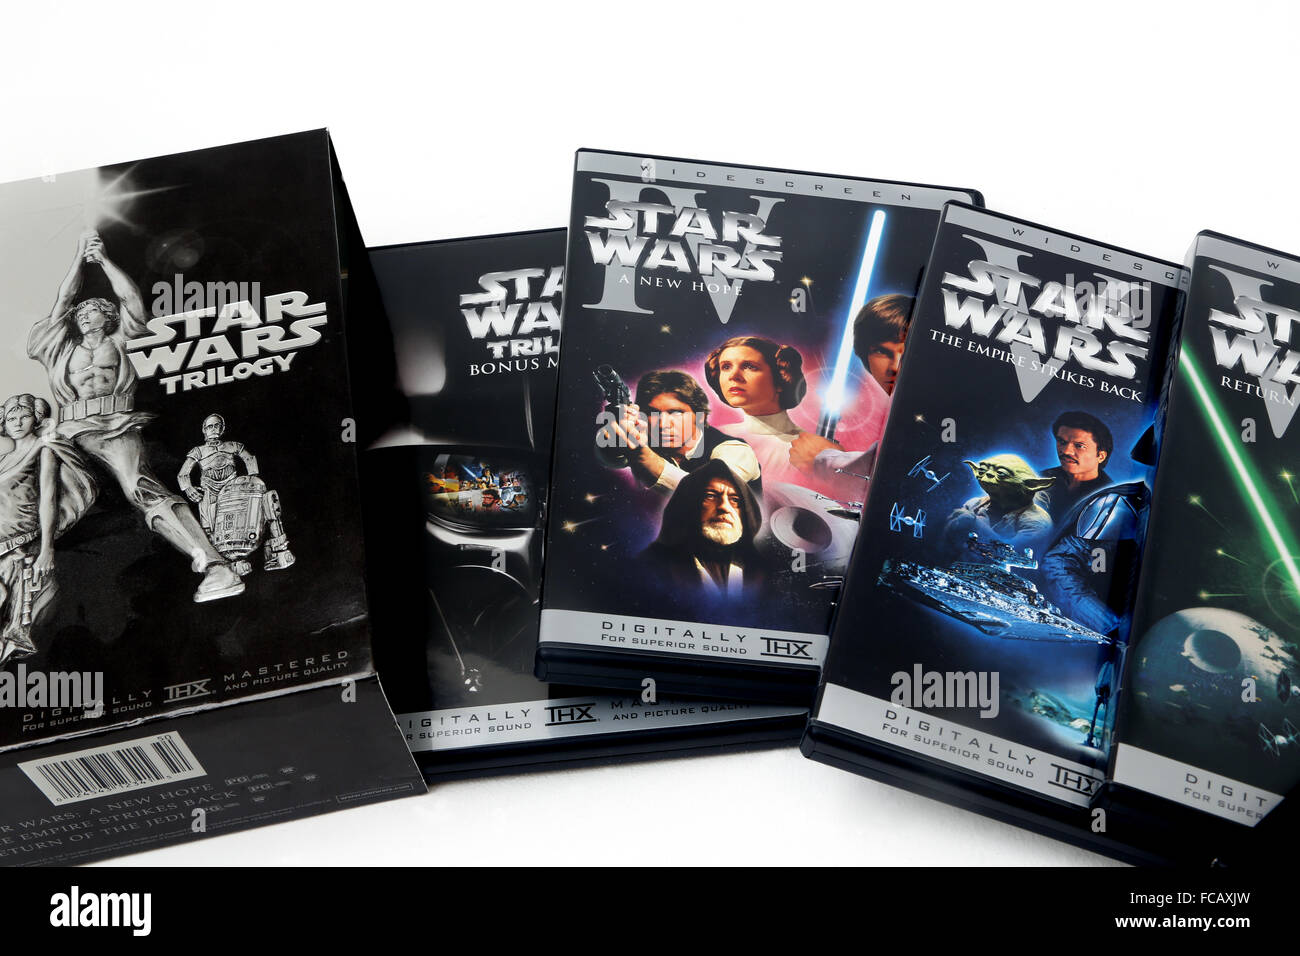 Star Wars Trilogy DVD Box Set Stock Photo